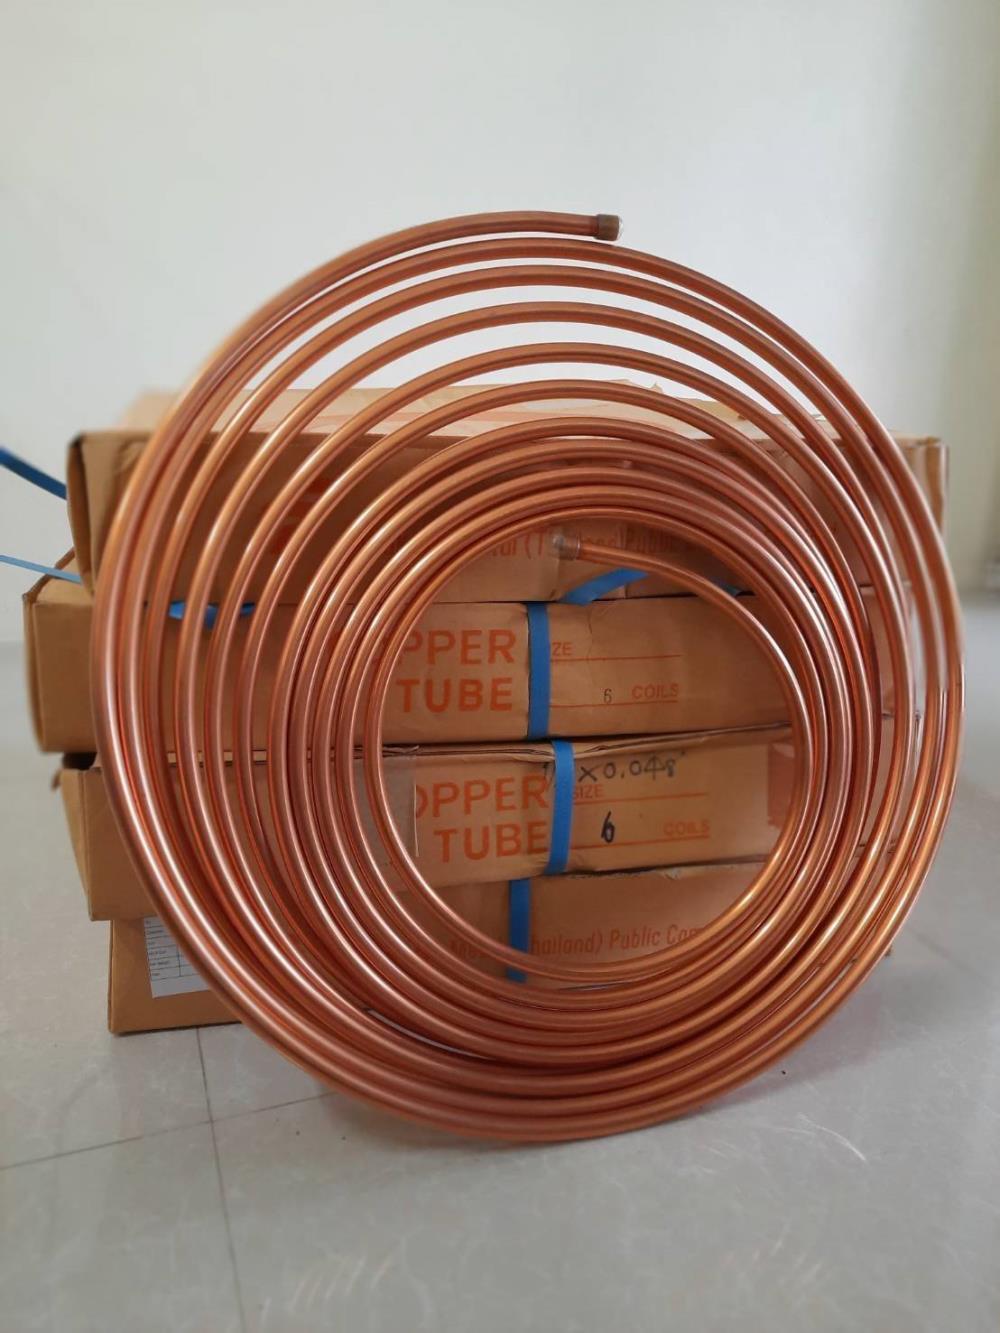 Copper Tube , Copper tube with PVC